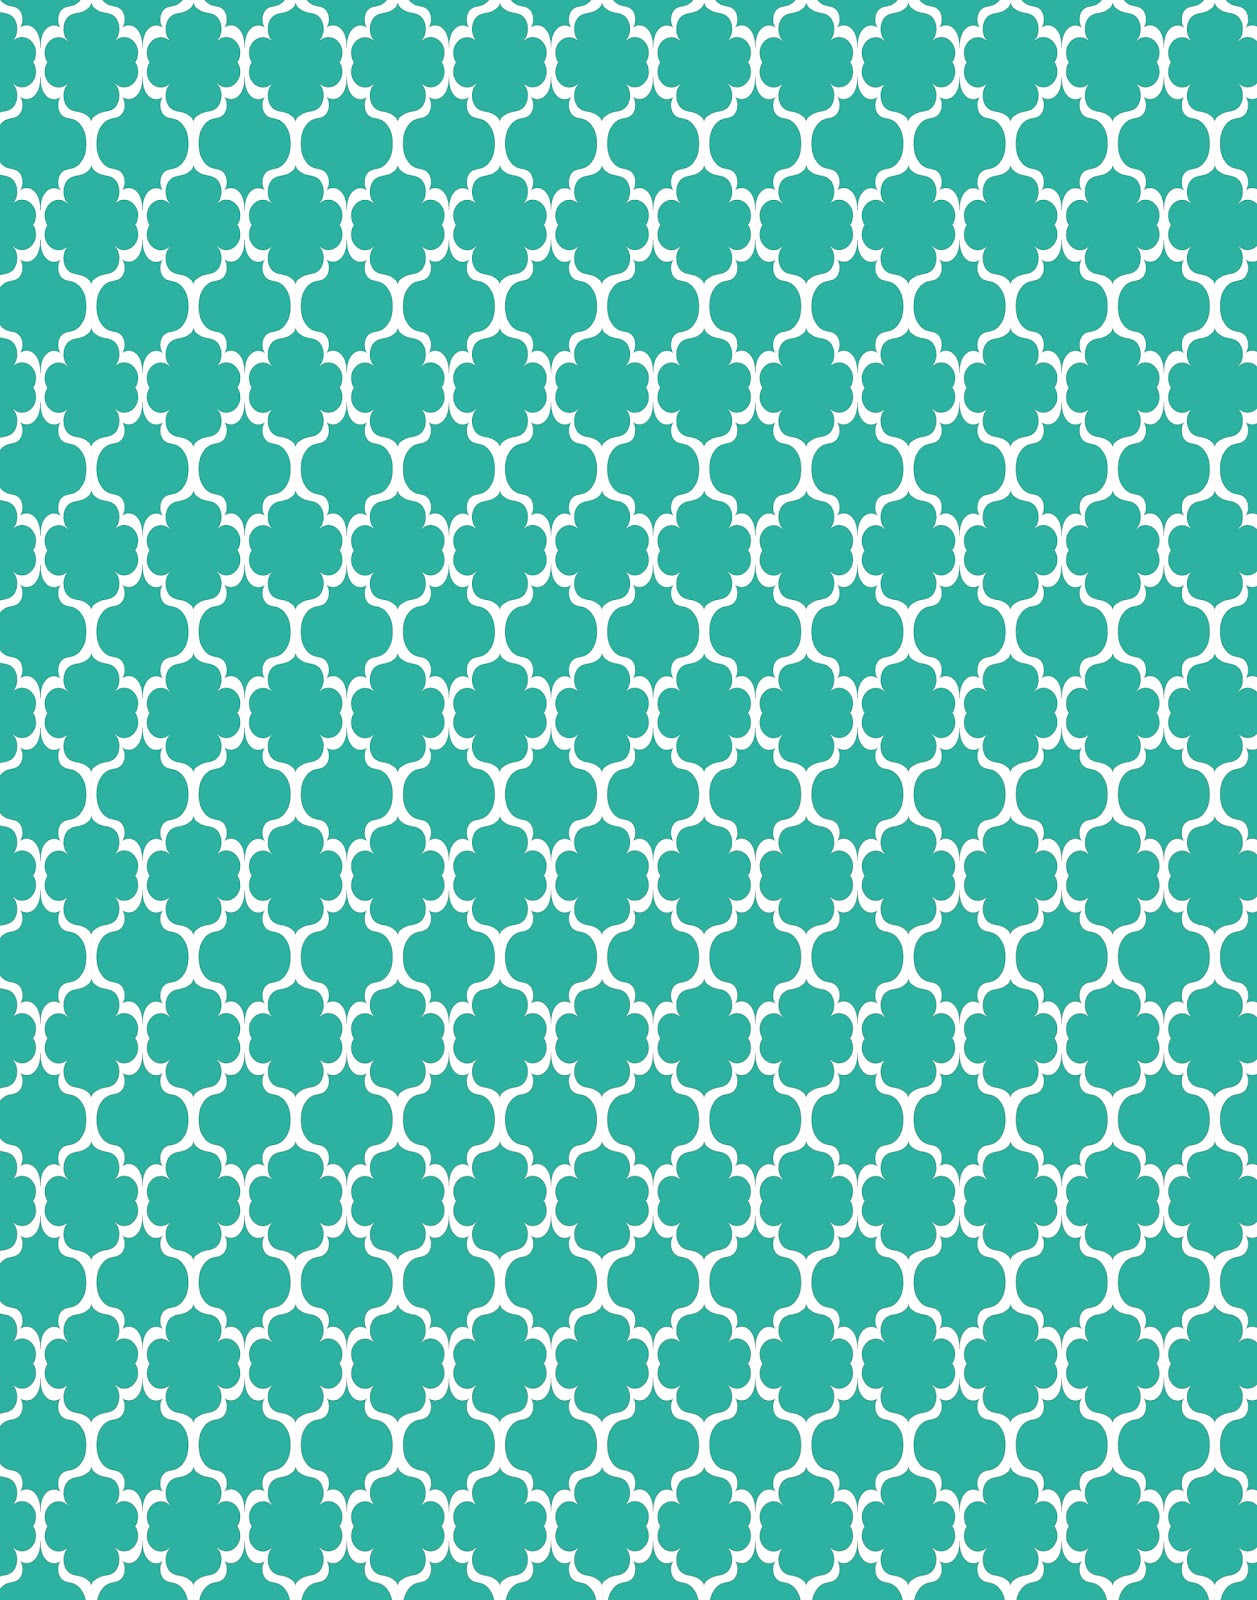 ... Patterns backgrounds: polka dots, moroccan, quatrefoil and damask